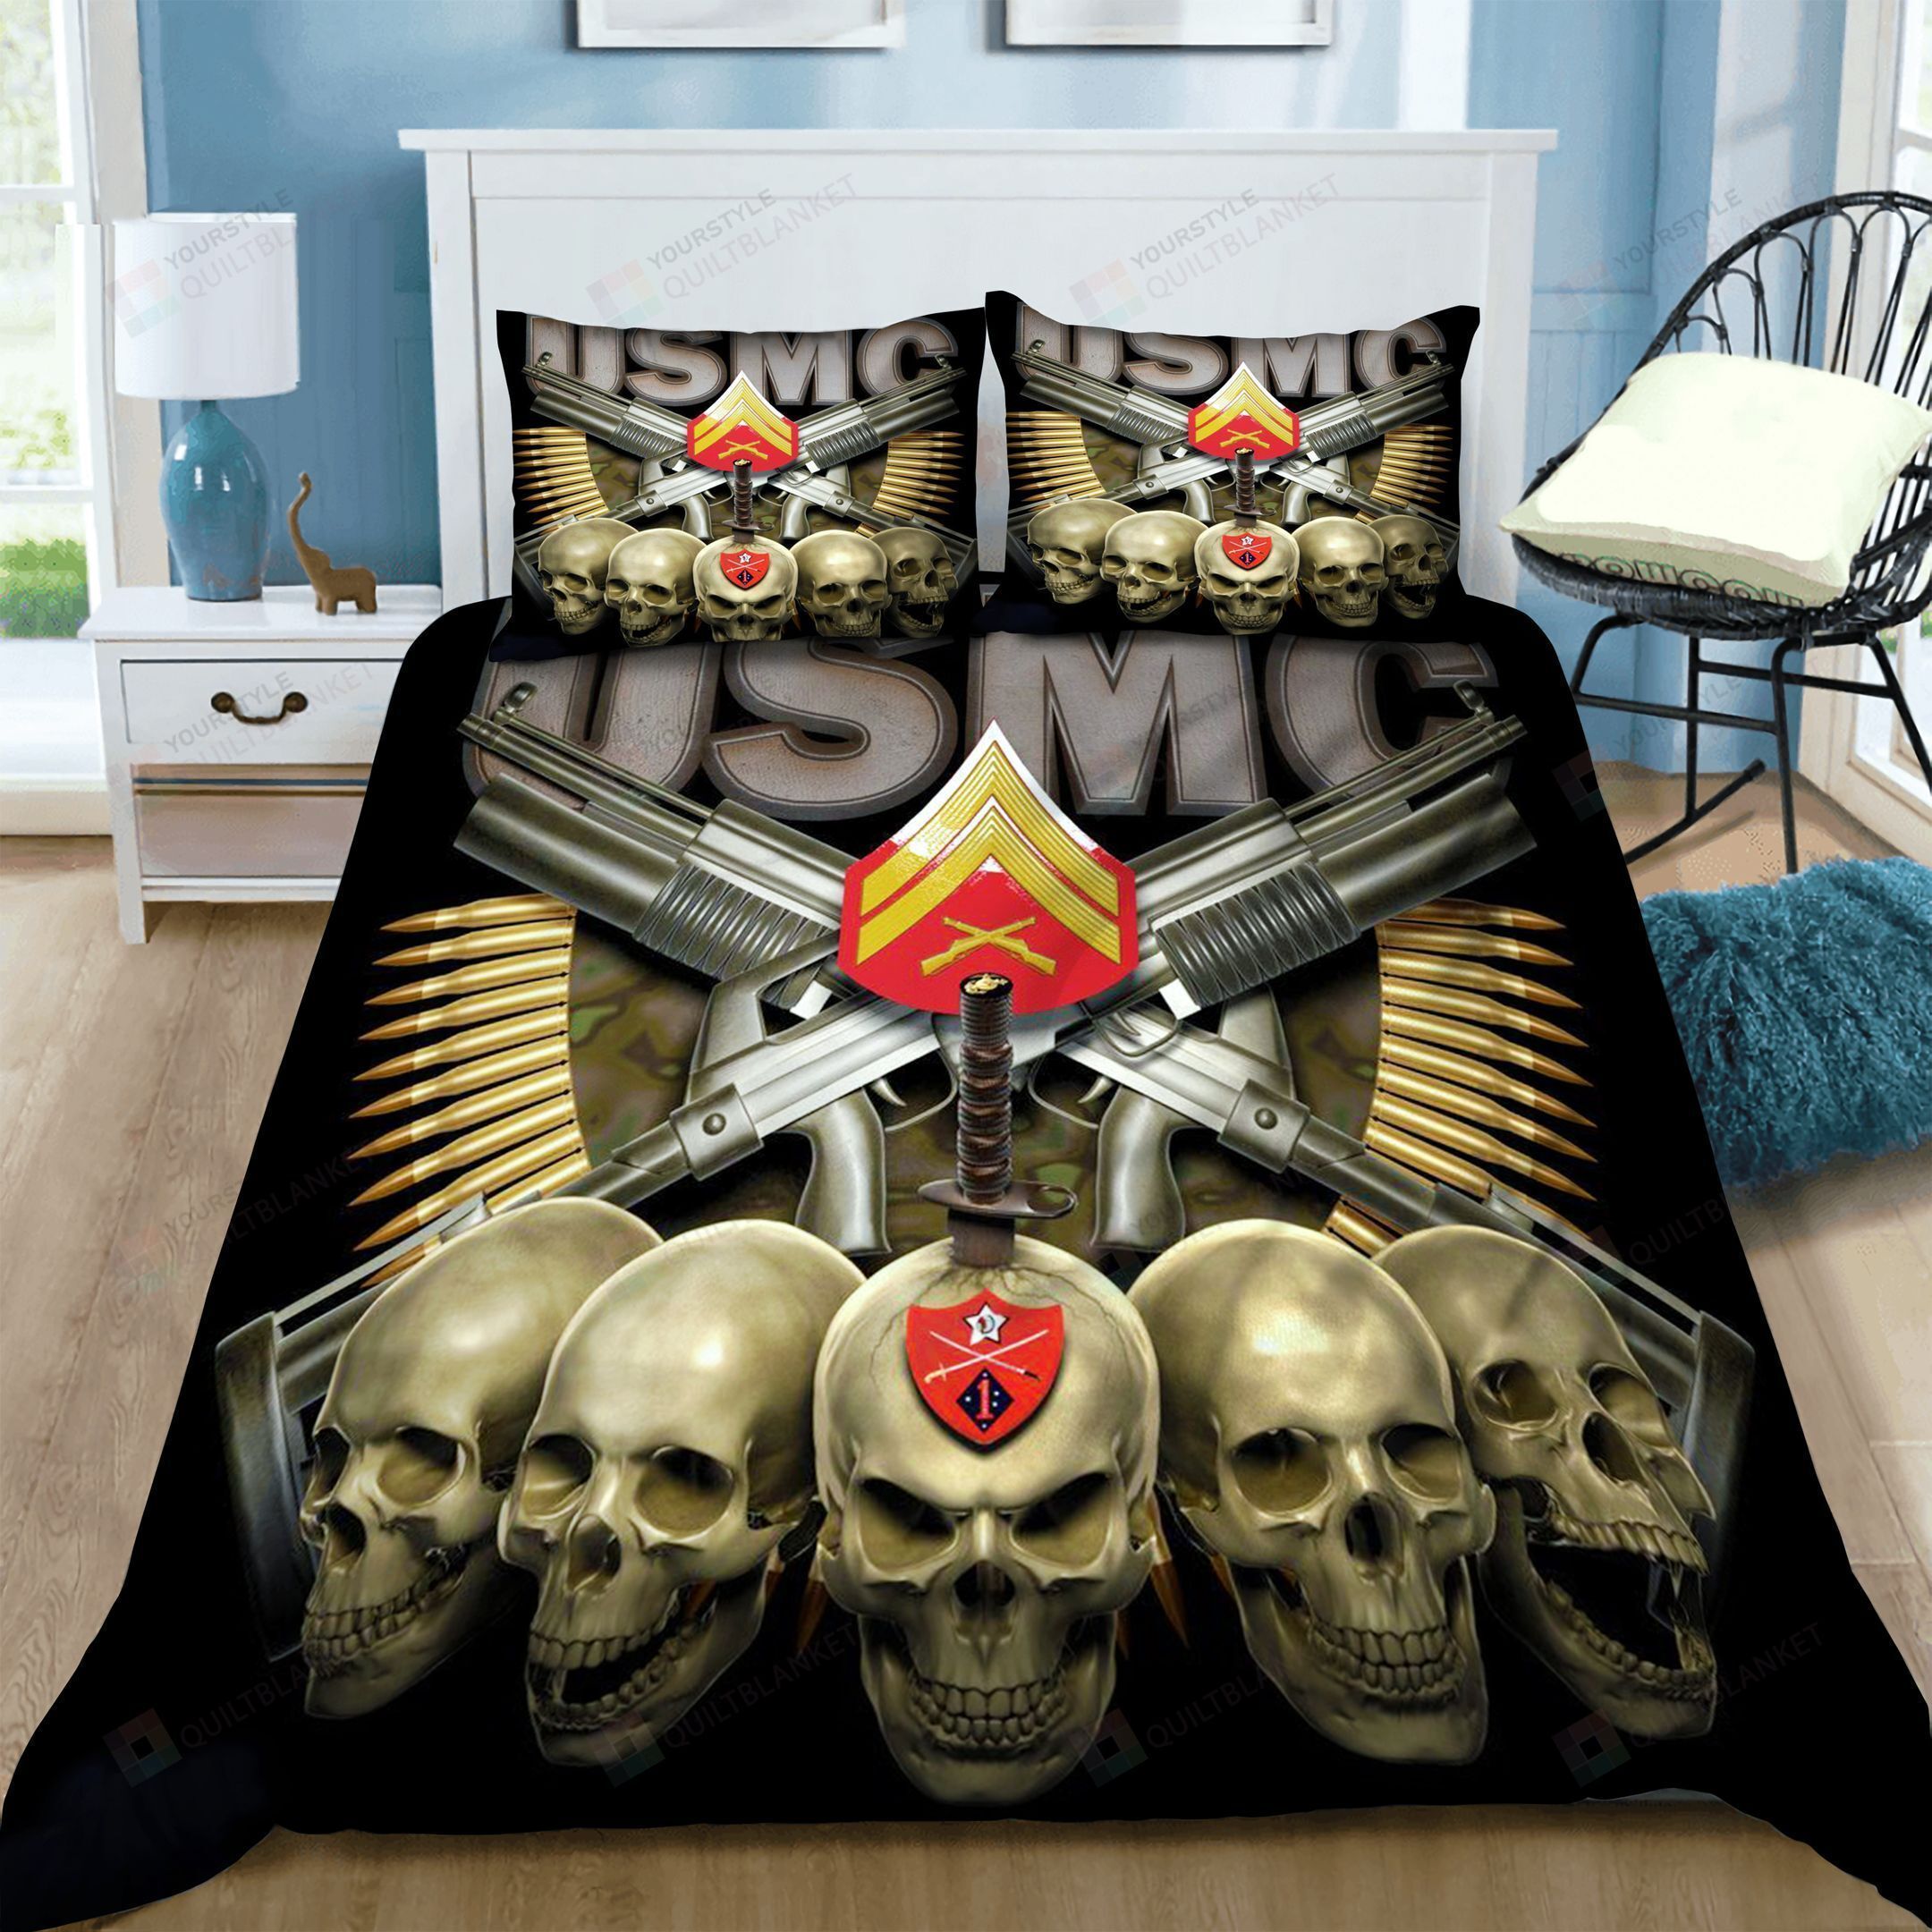 Skull US Marine Corp Bedding Set Cotton Bed Sheets Spread Comforter Duvet Cover Bedding Sets